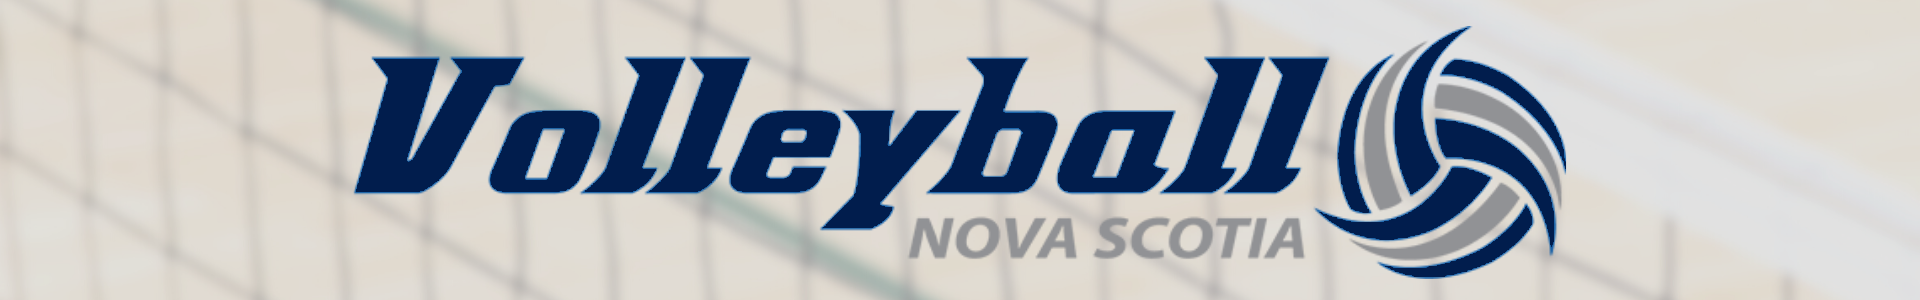 Volleyball Nova Scotia